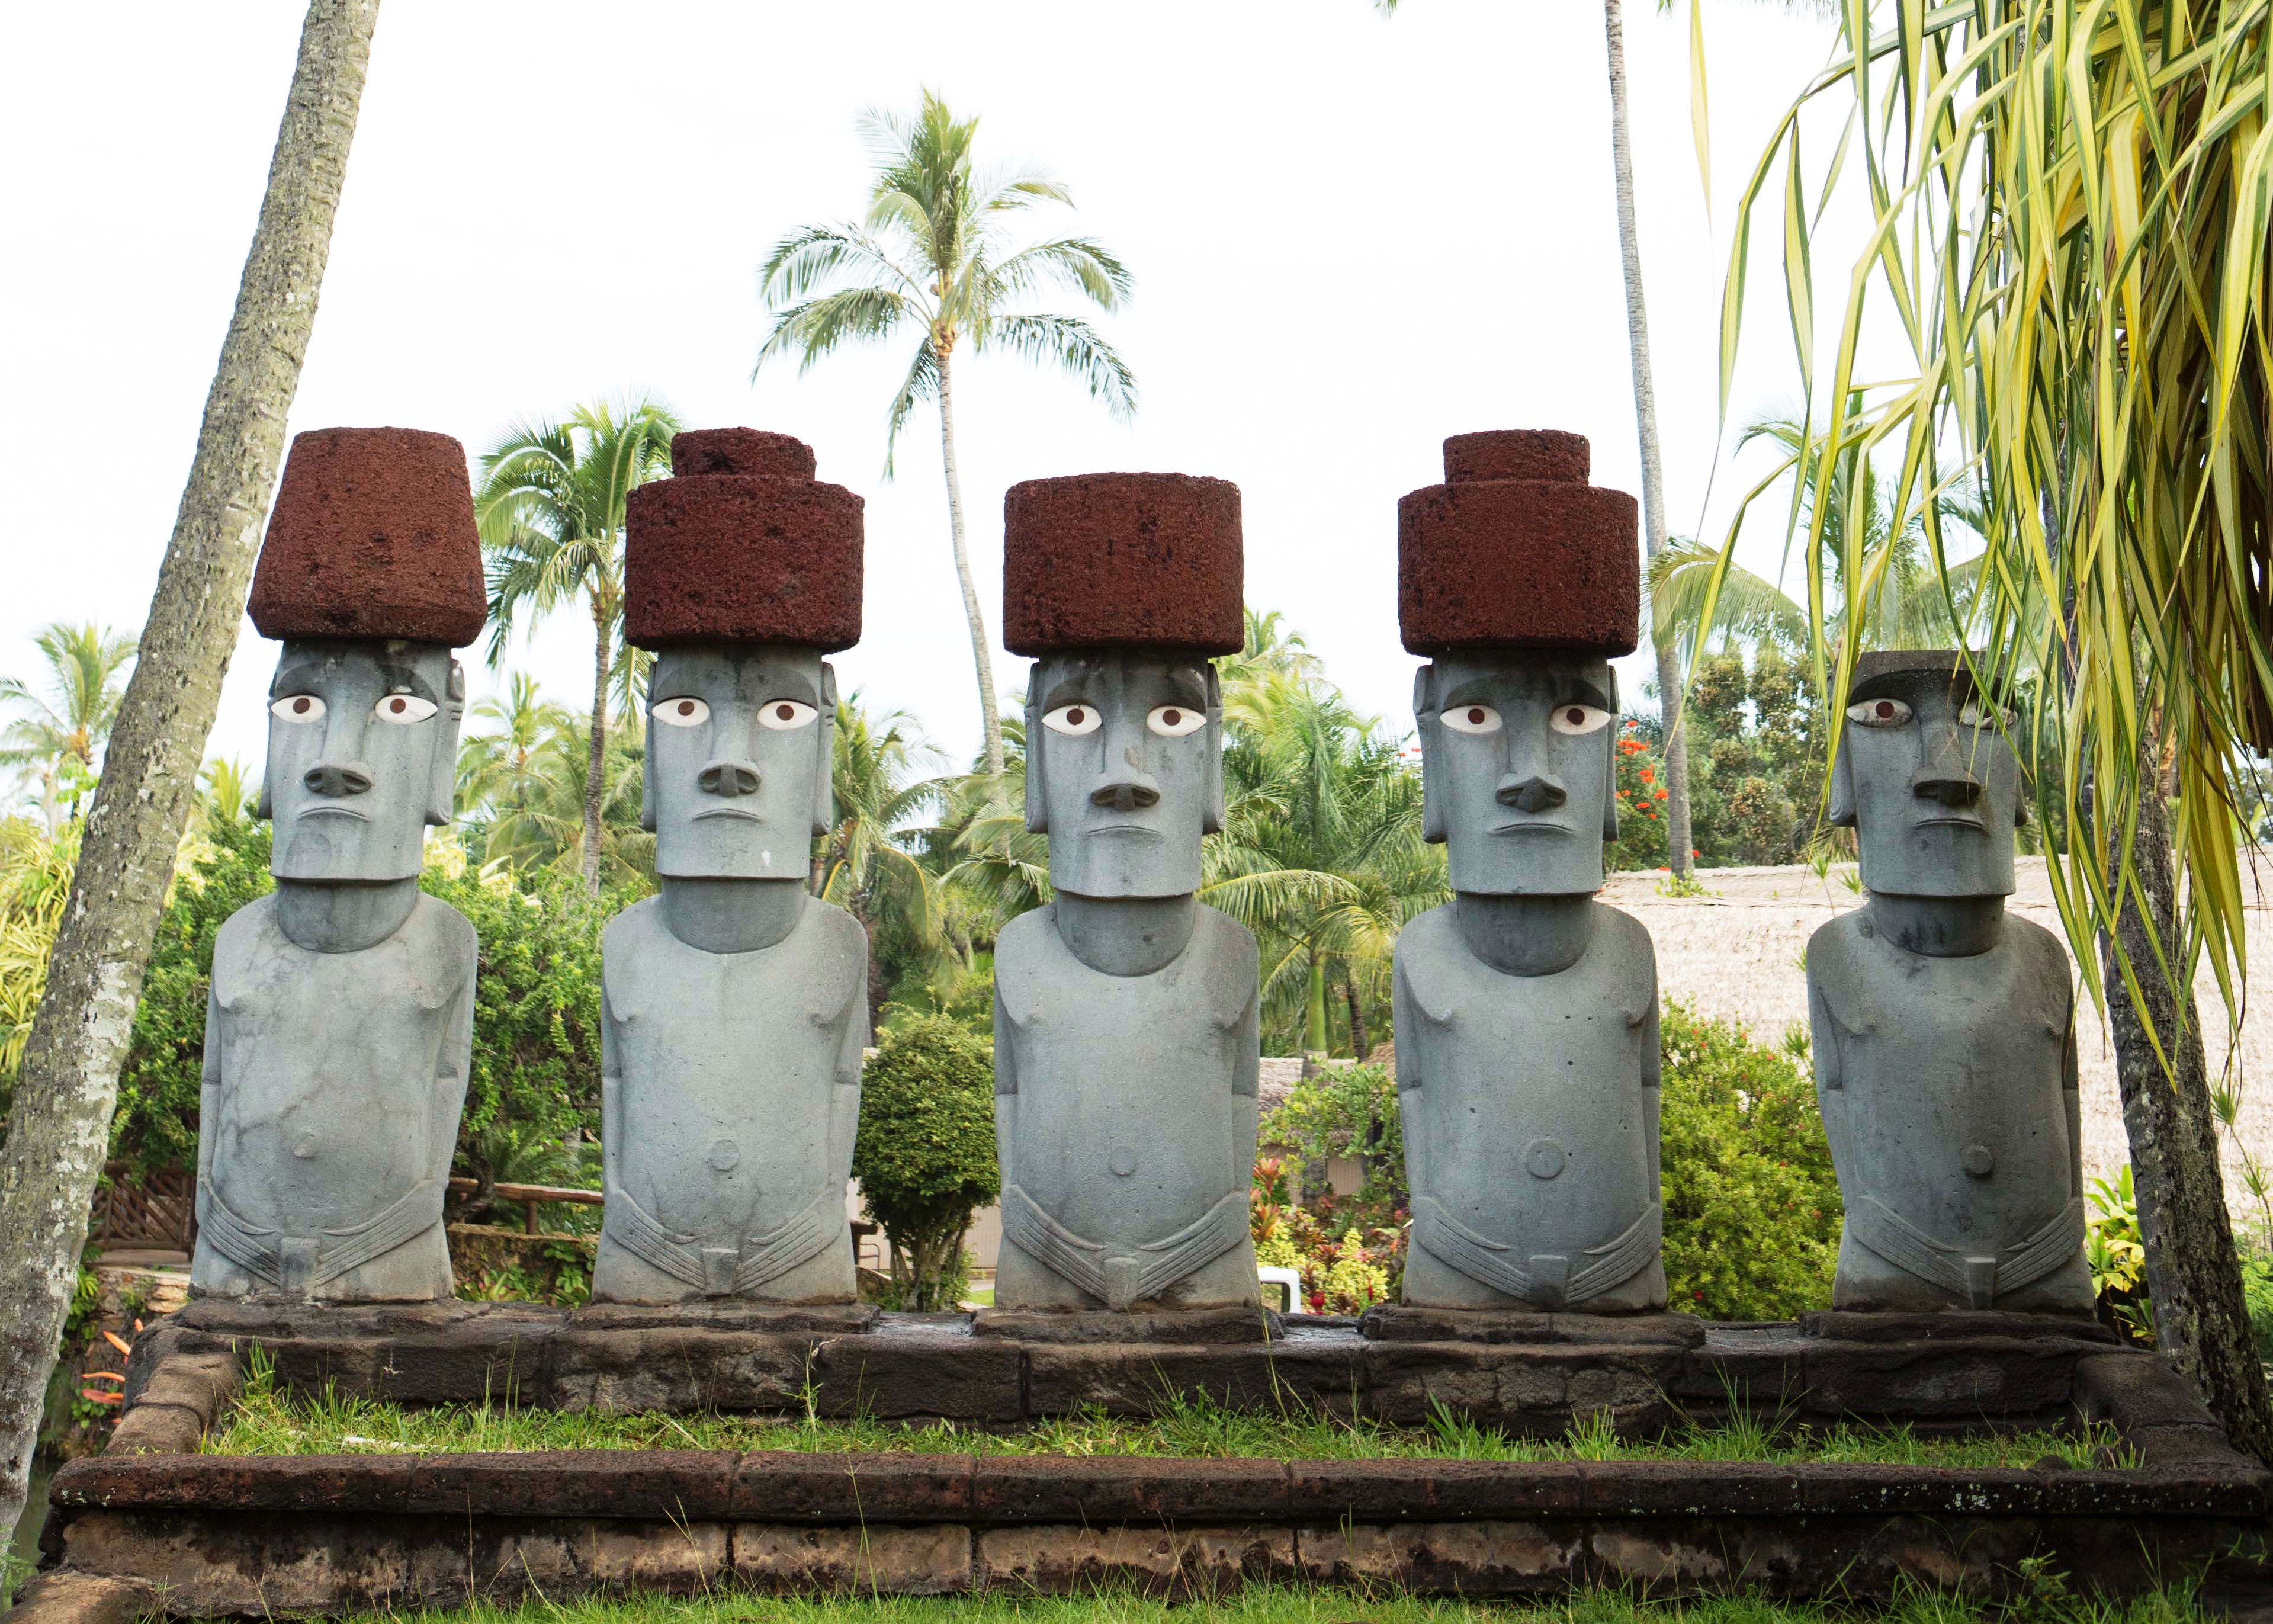 How Rapa Nui’s Moai came to the PCC